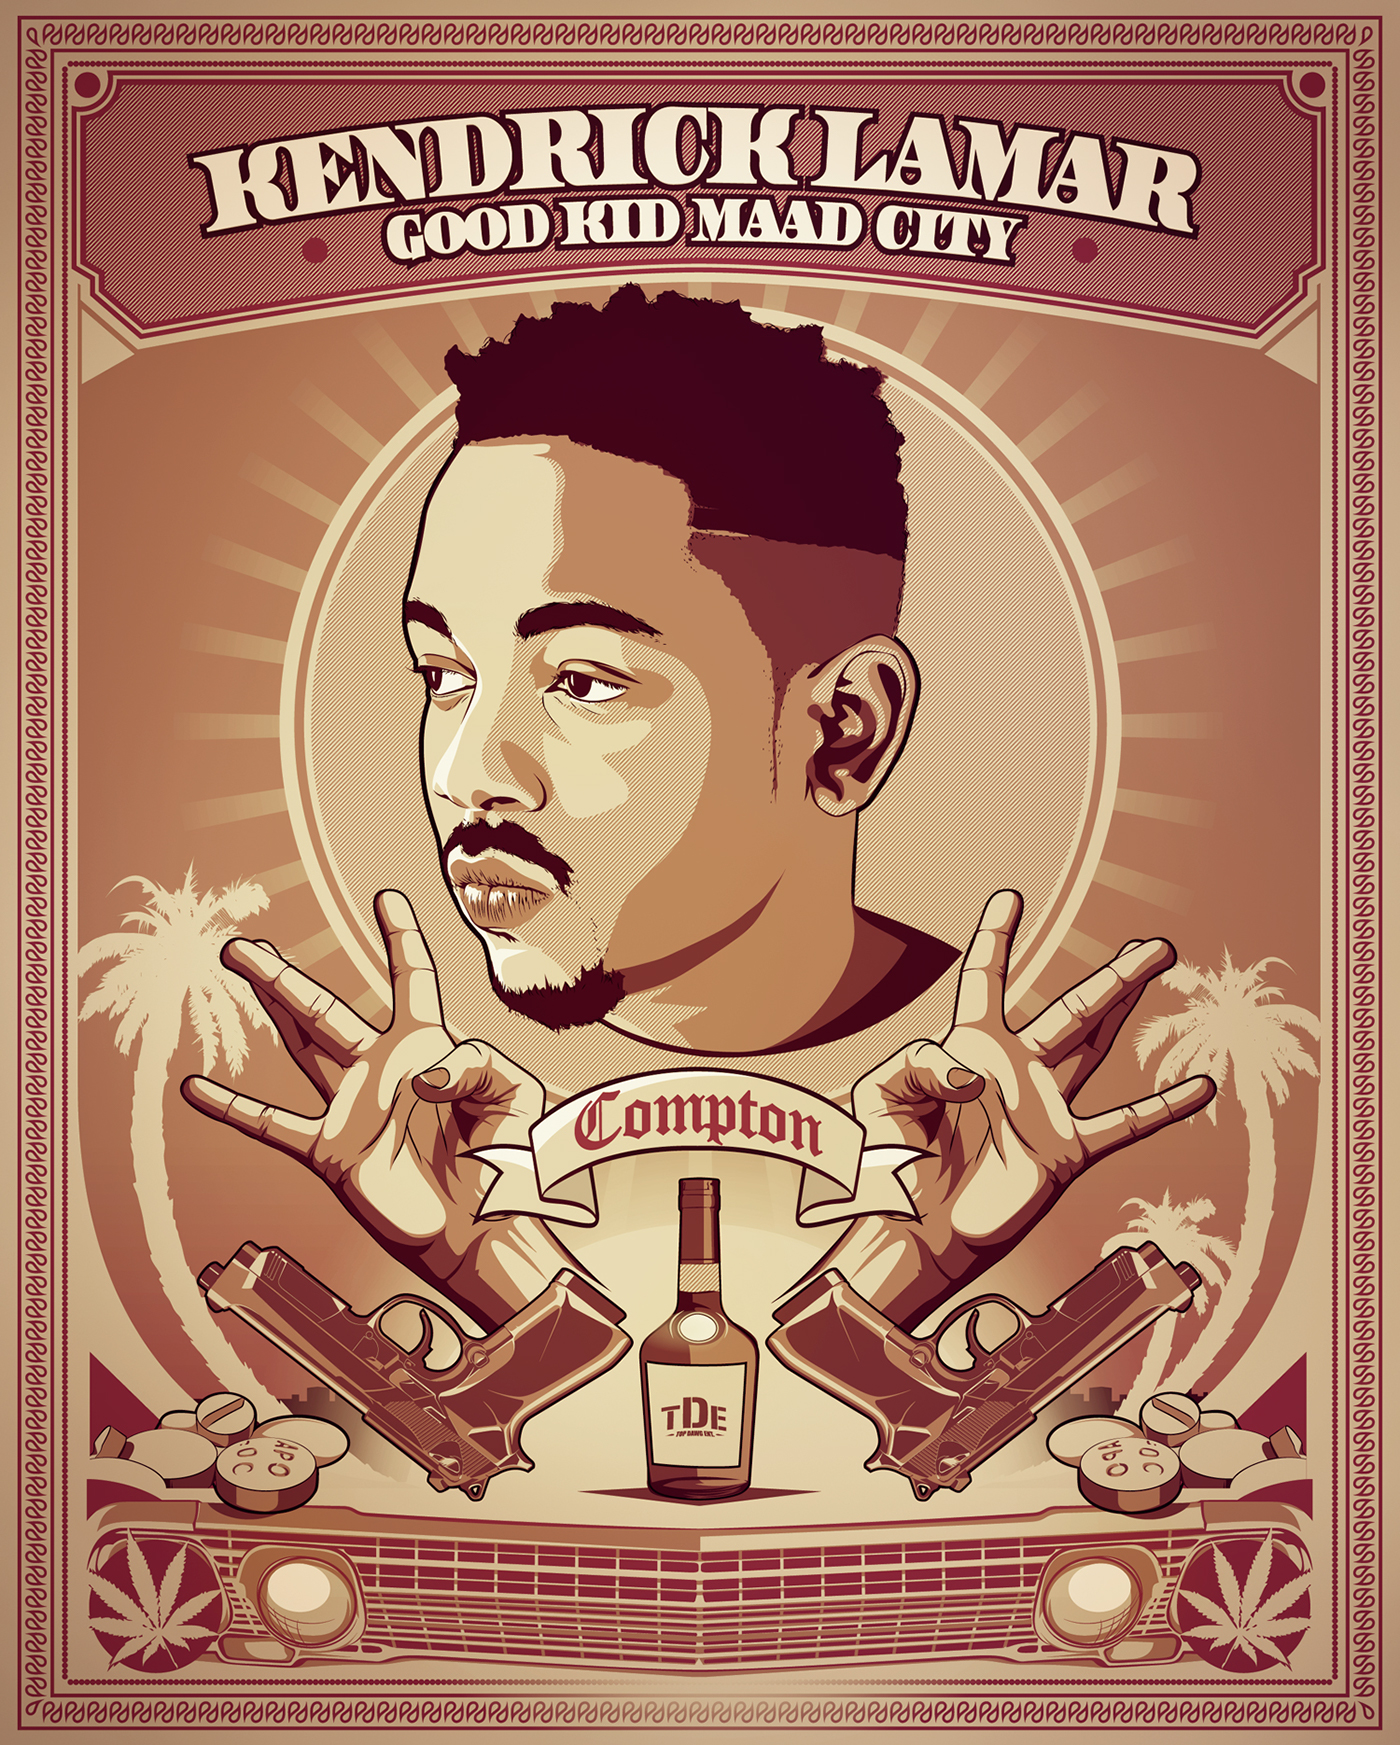 KENDRICK LAMAR - Good Kid MAAD City Poster on Behance Good Kid Maad City Artwork